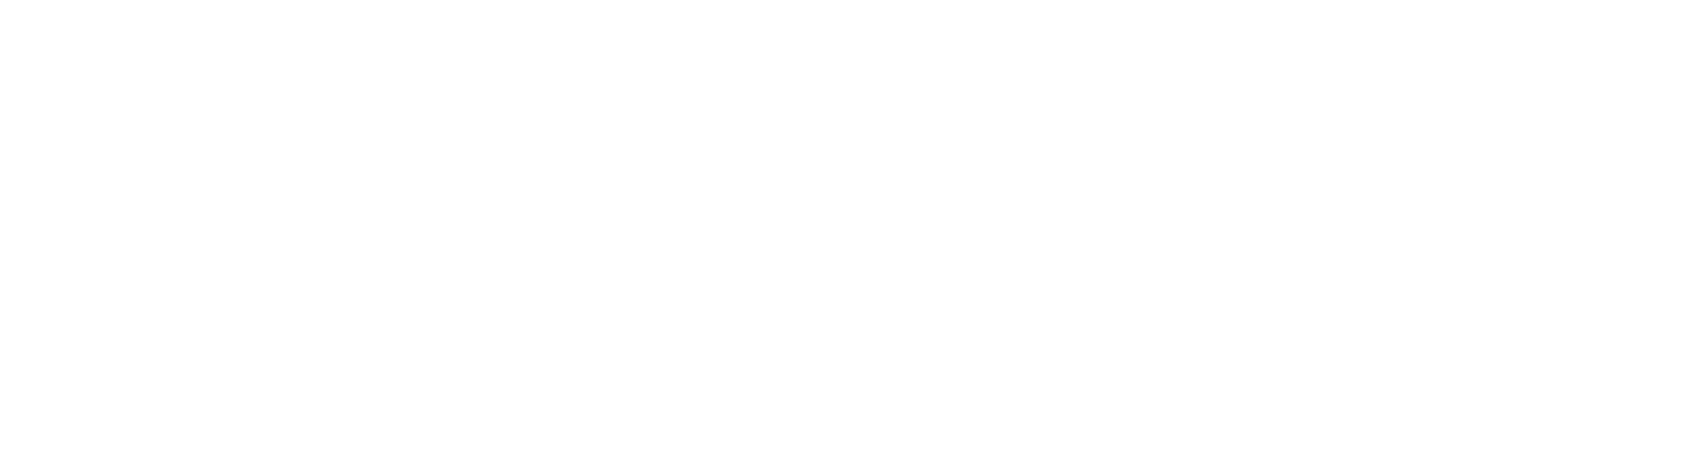 Quest Advanced Women's Health